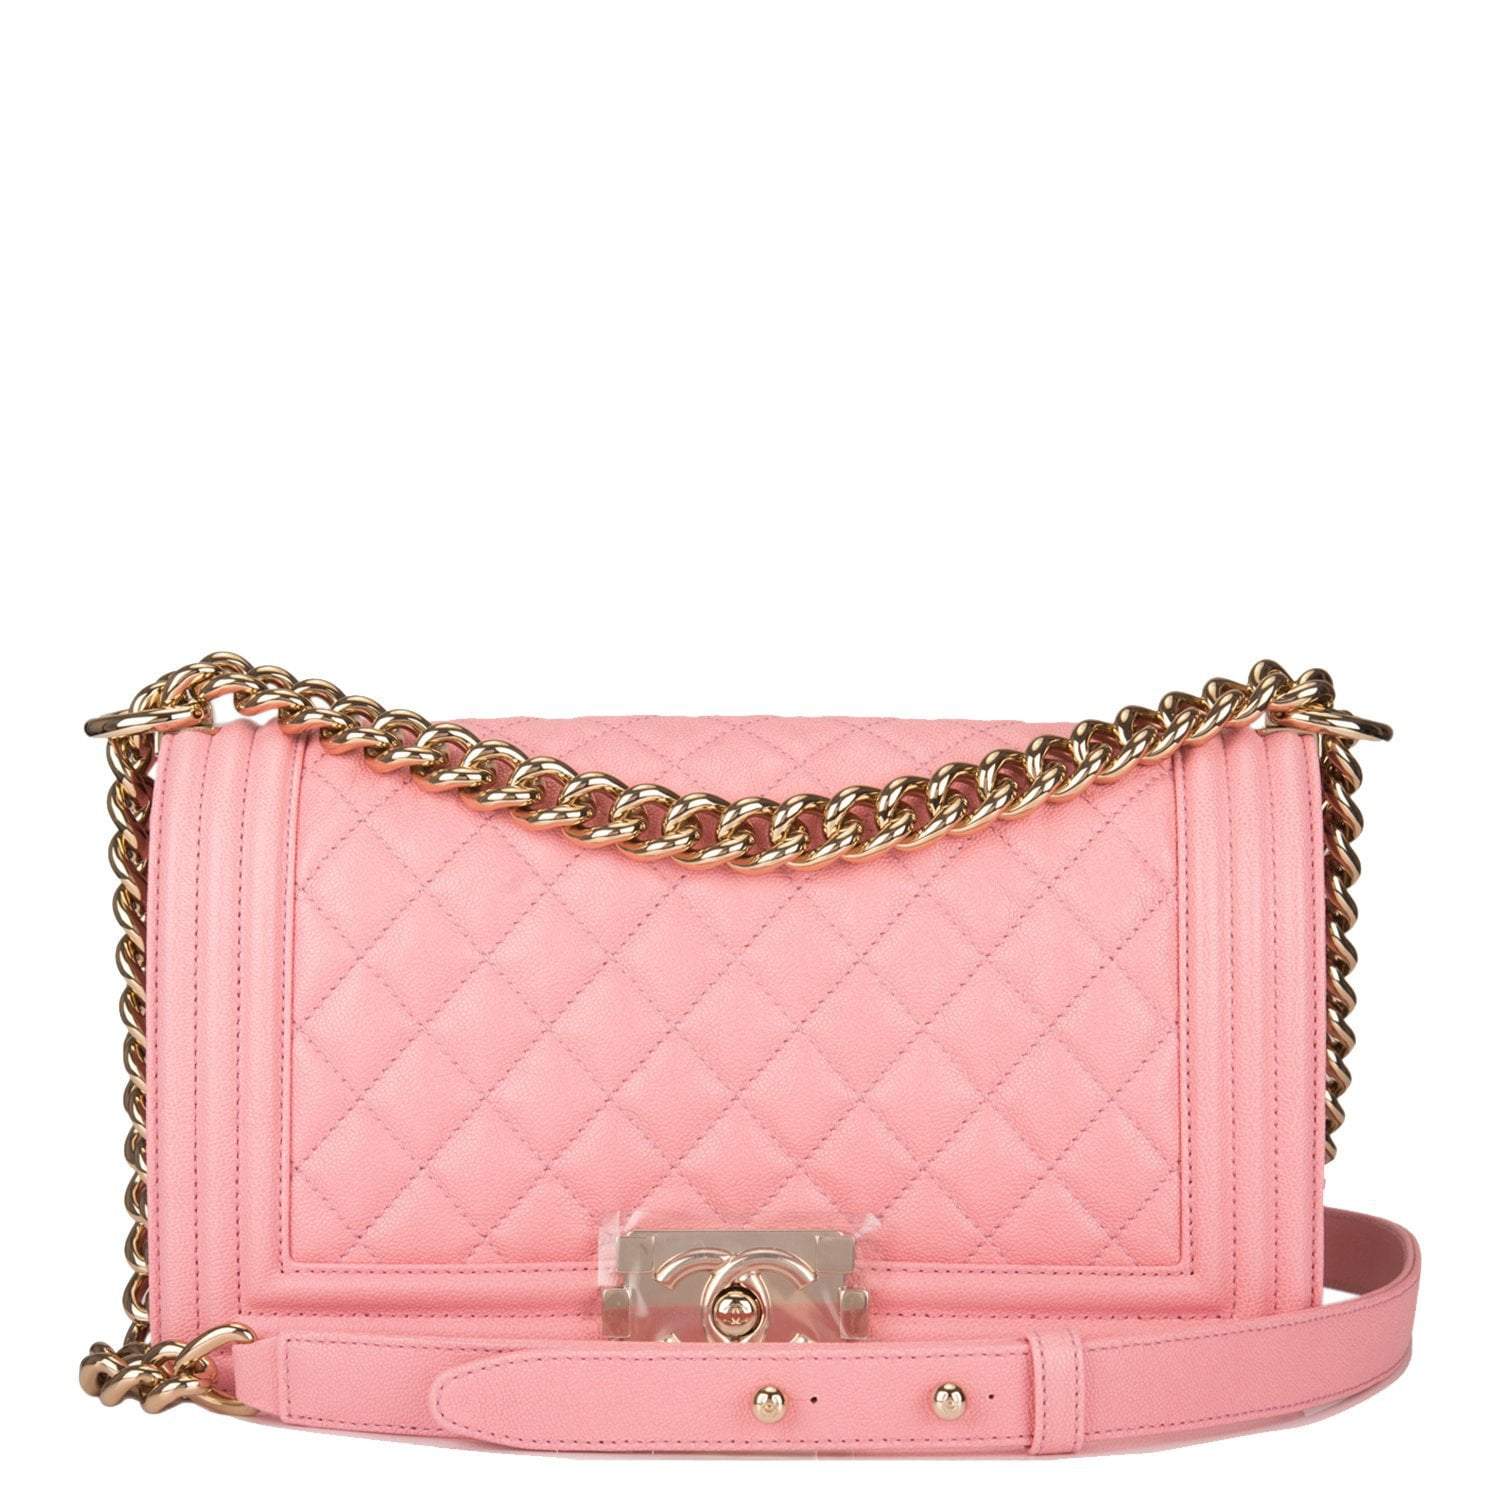 Chanel Pink Quilted Caviar Medium Boy Bag Light Gold Hardware